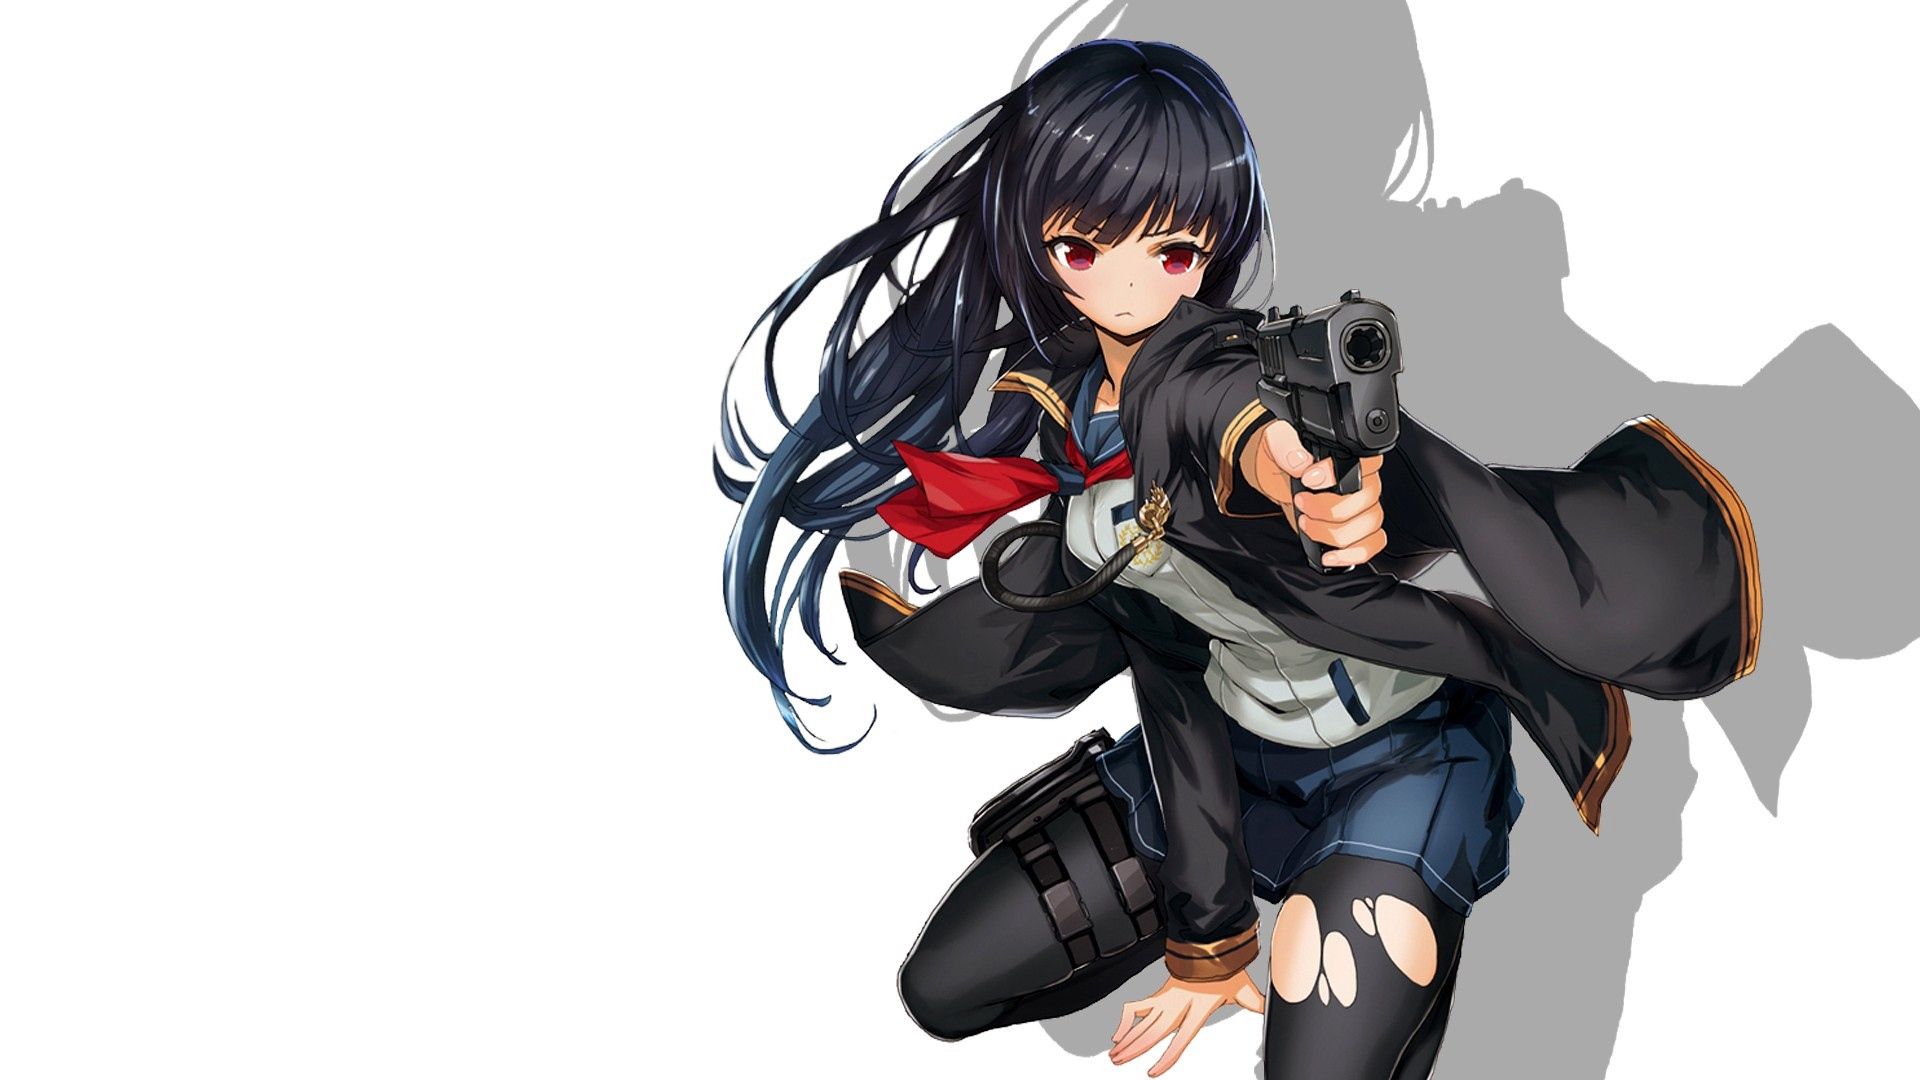 Black Hair Anime Girl With Gun Wallpaper